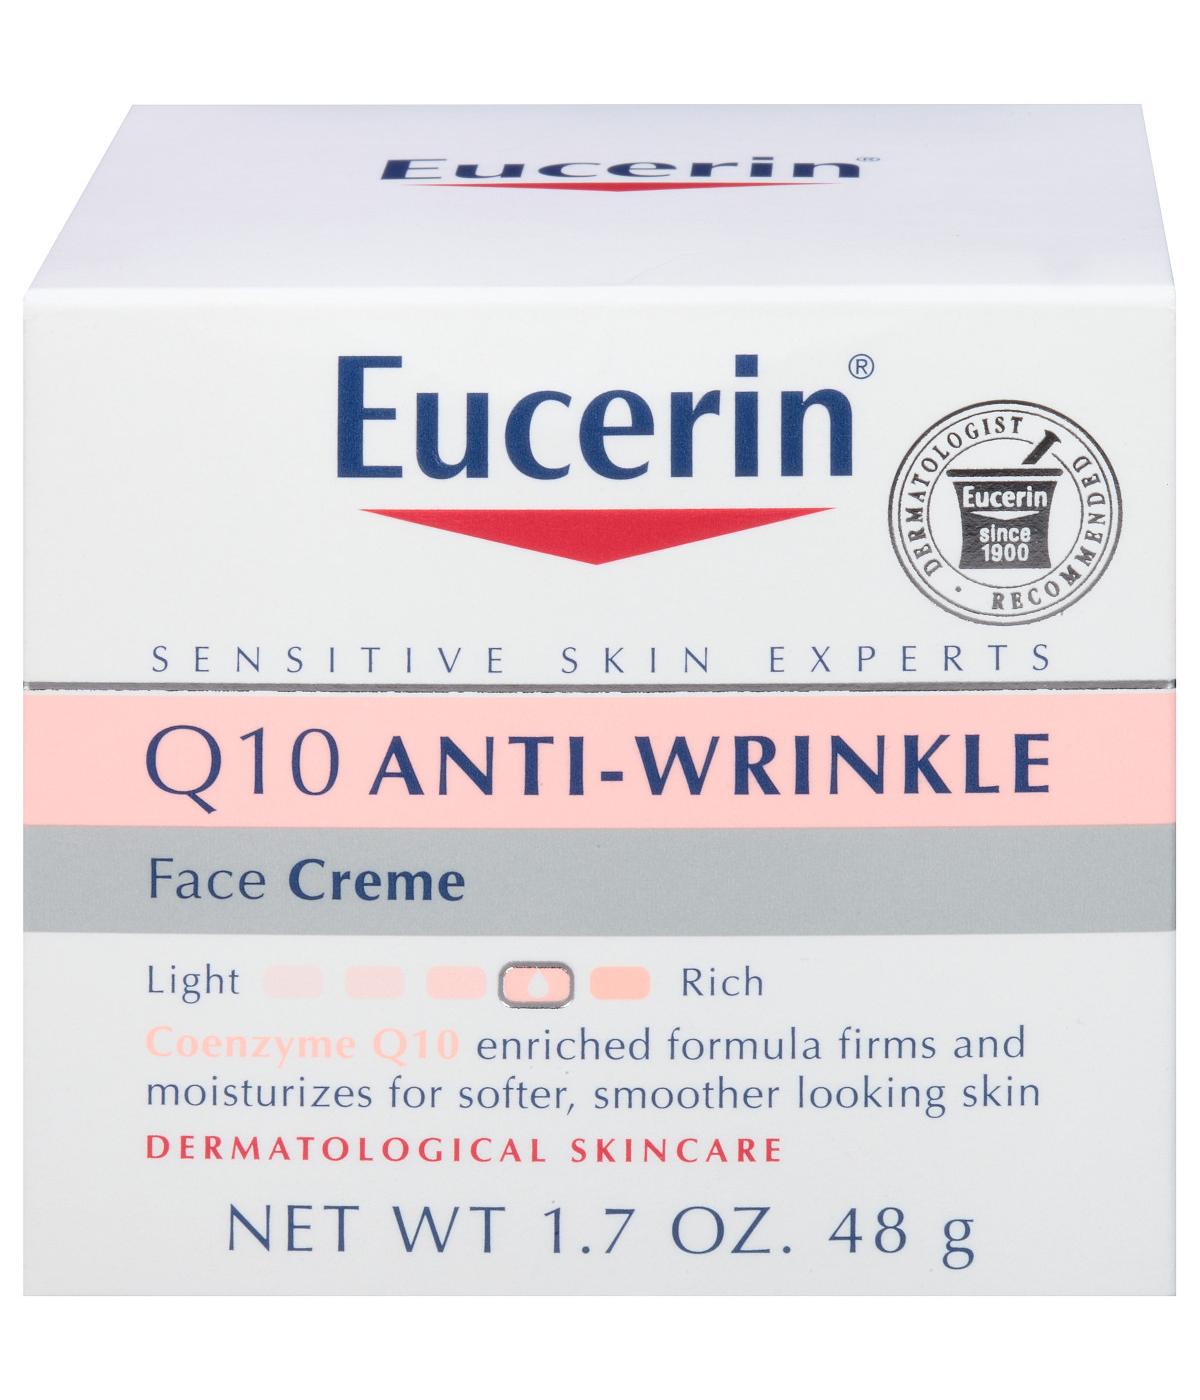 Eucerin Q10 Anti-Wrinkle Sensitive Skin Face Creme; image 5 of 5